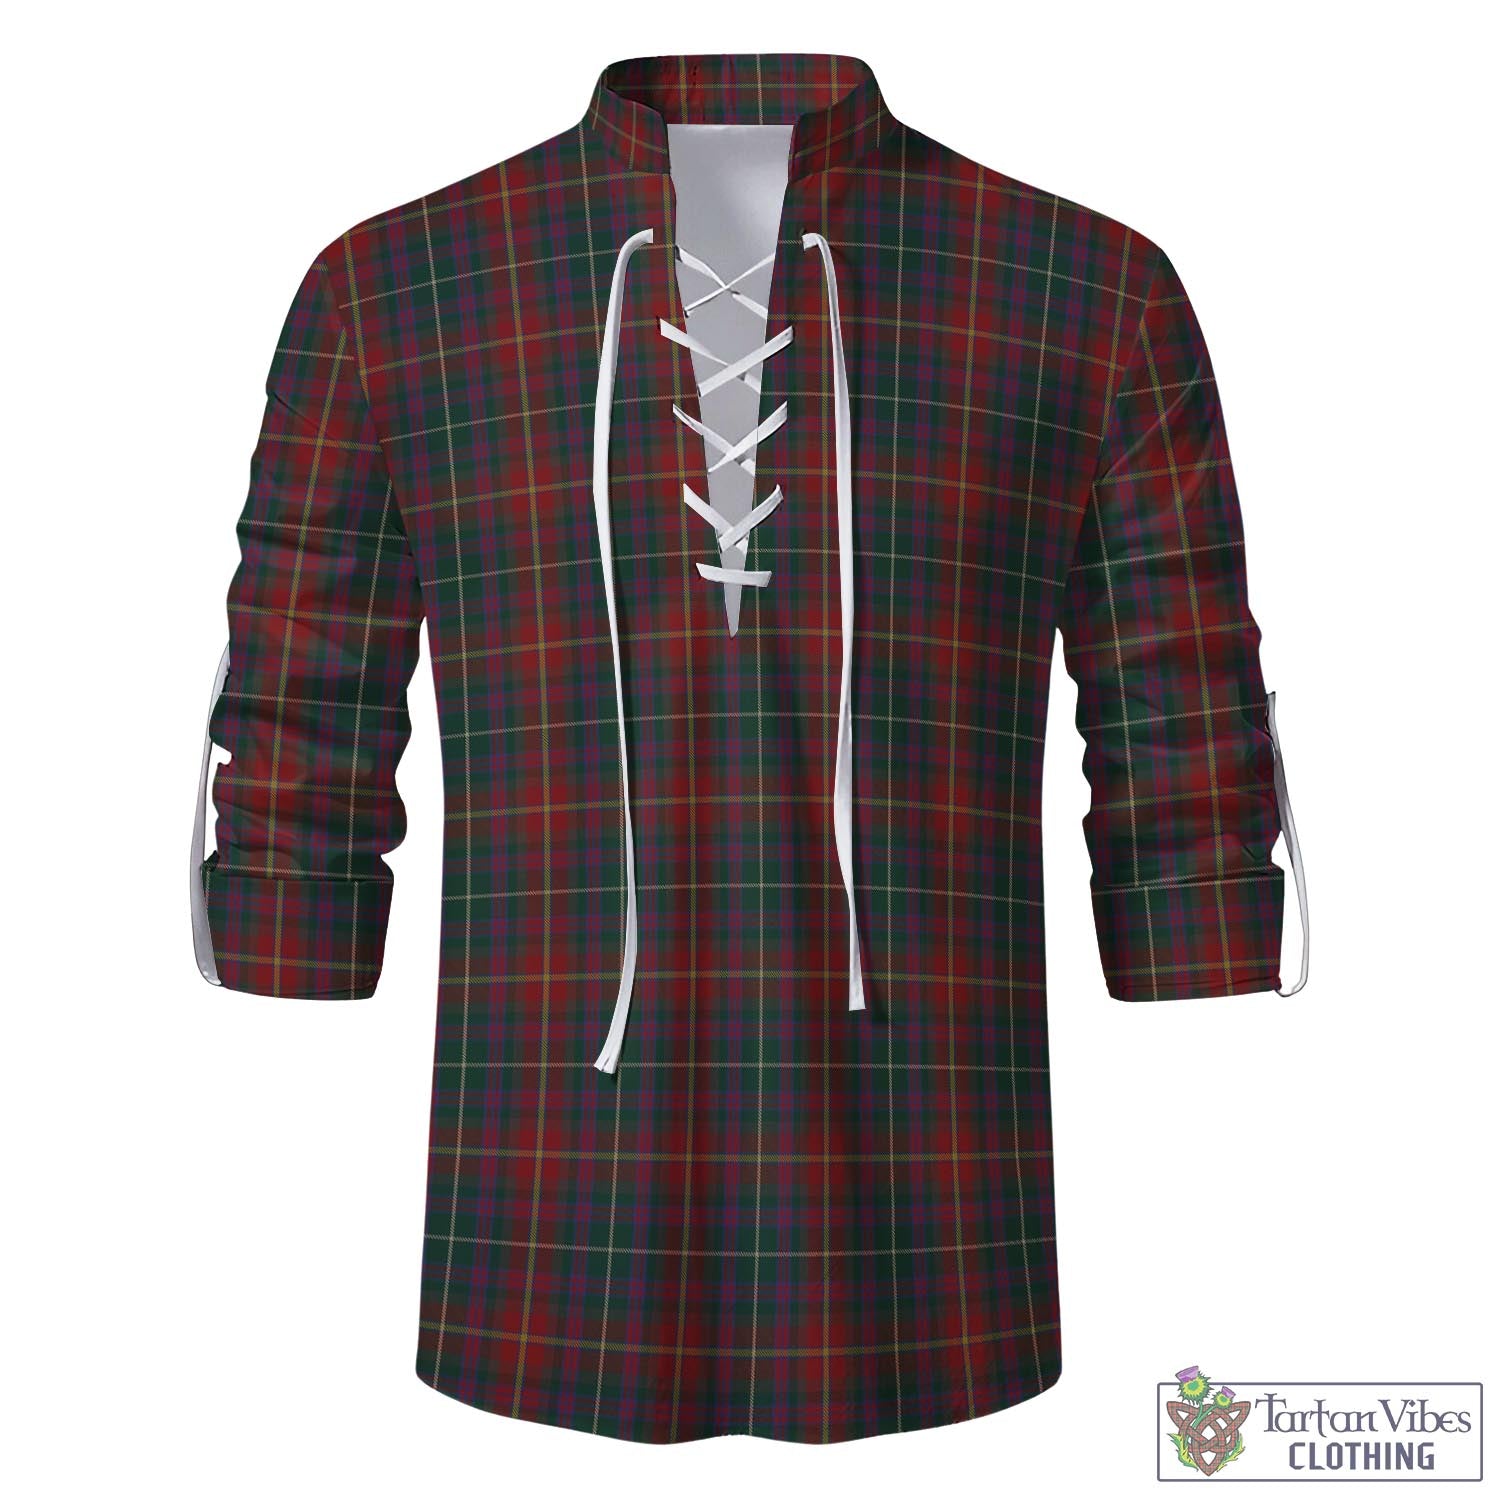 Tartan Vibes Clothing Meath County Ireland Tartan Men's Scottish Traditional Jacobite Ghillie Kilt Shirt